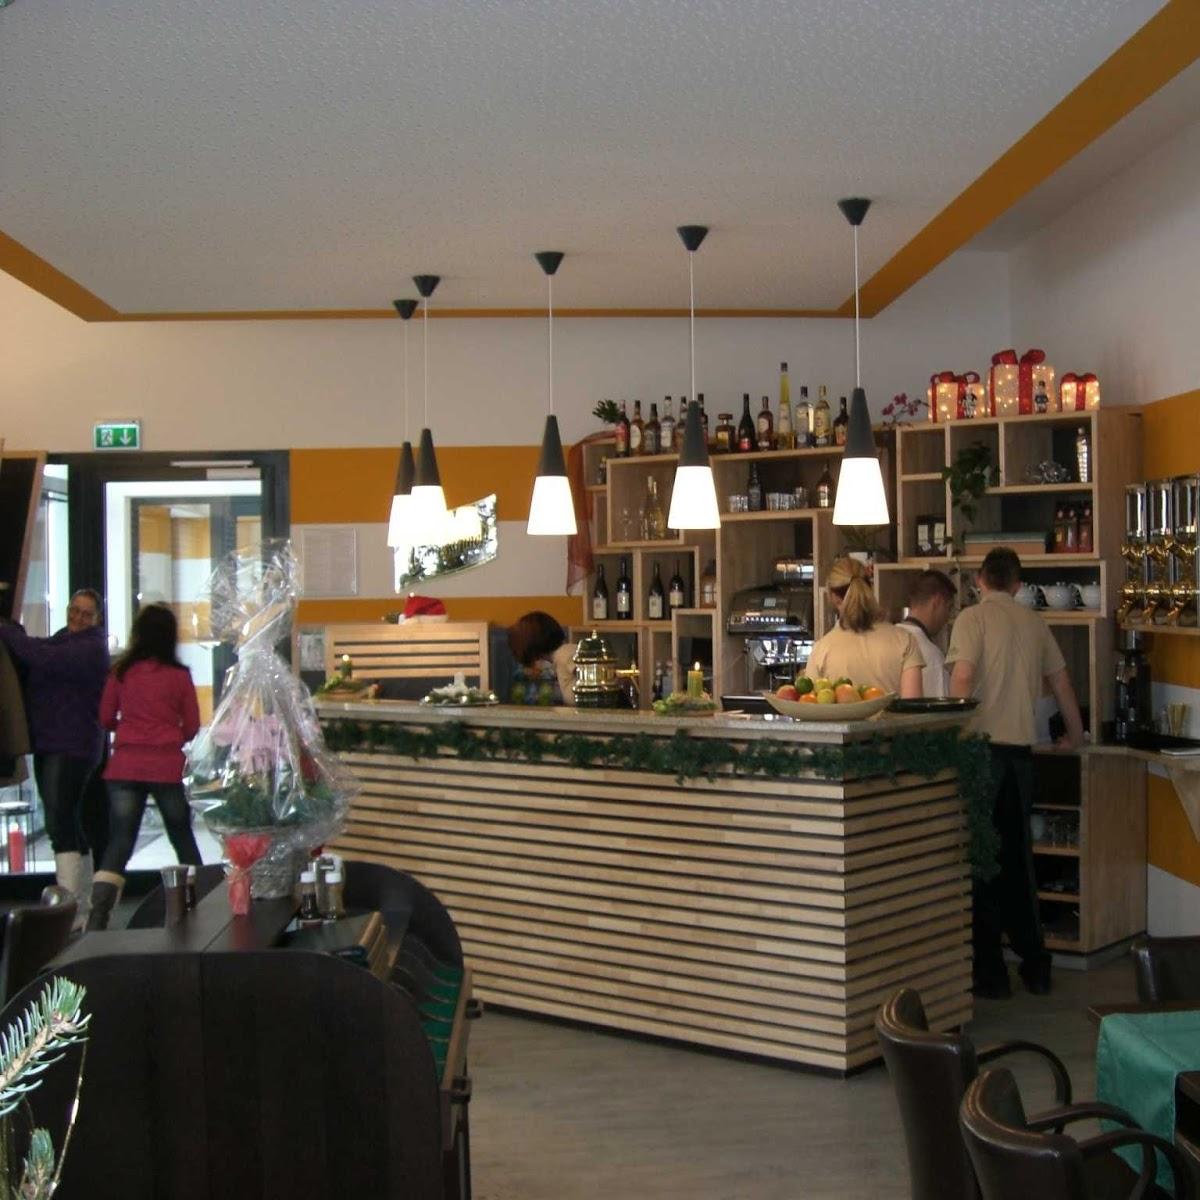 Restaurant "Theatercafé" in  Staßfurt